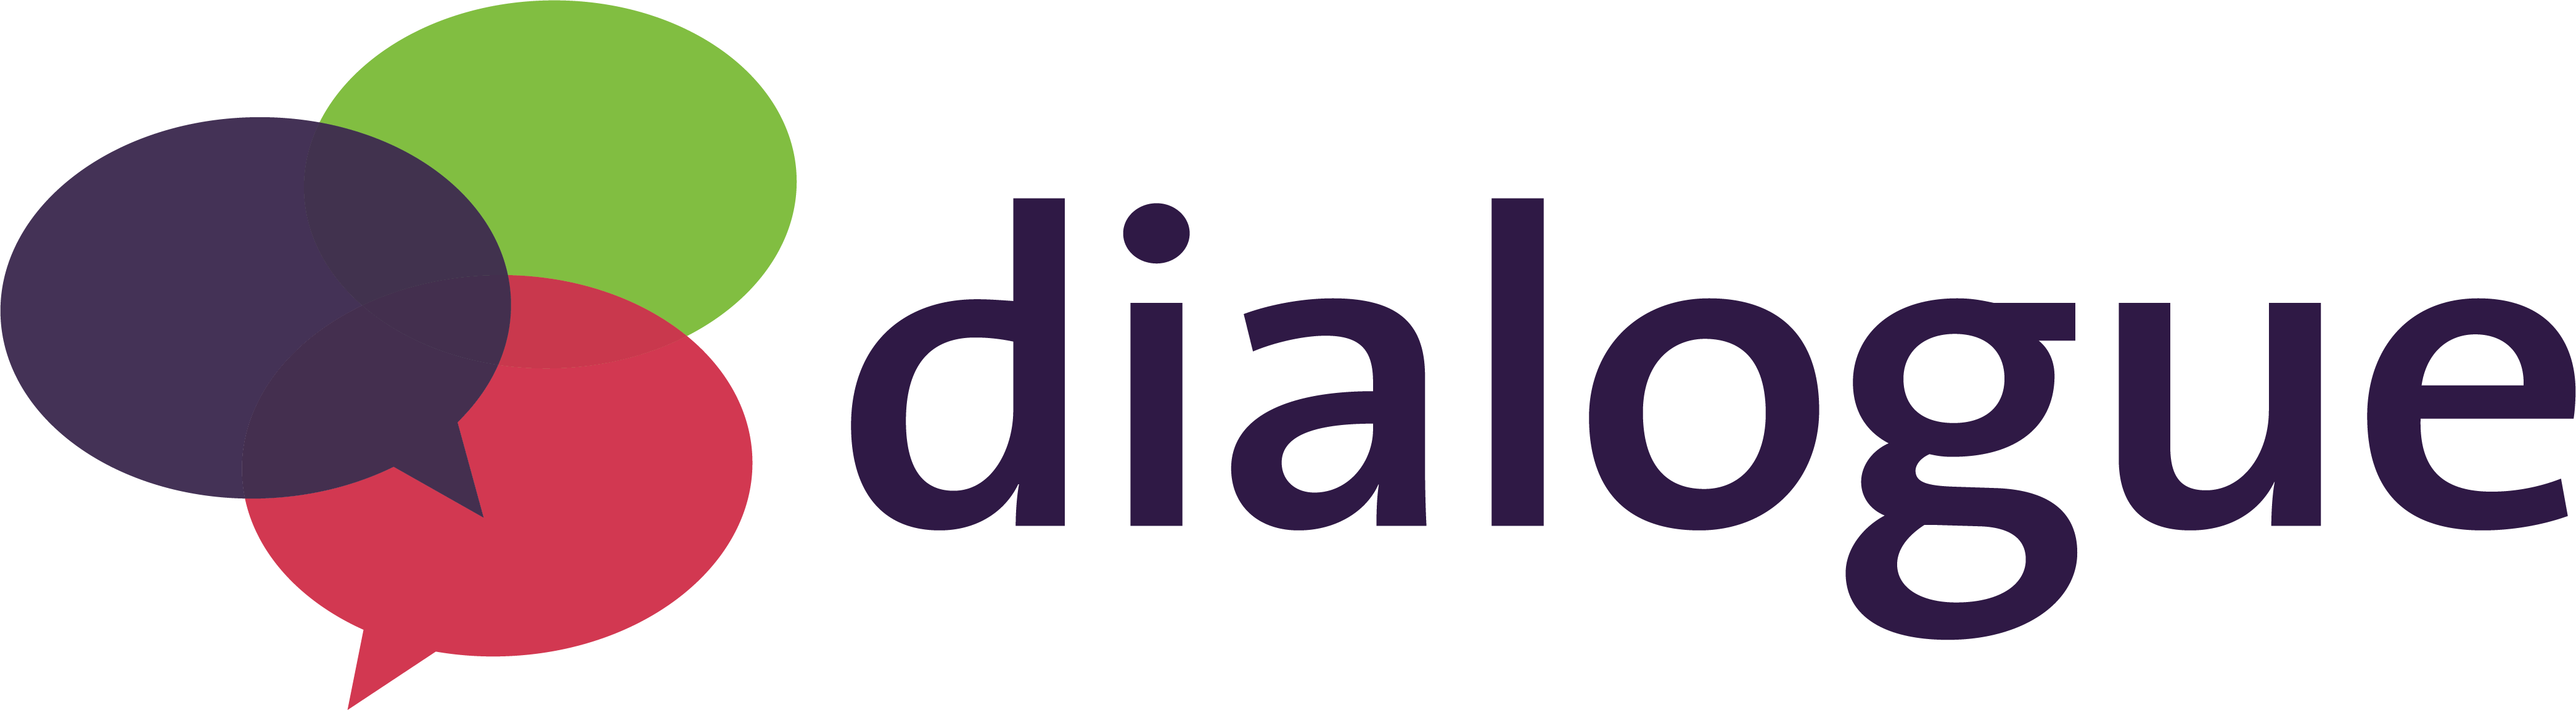 Dialogue Logo - Dialogue / John Glenn College of Public Affairs